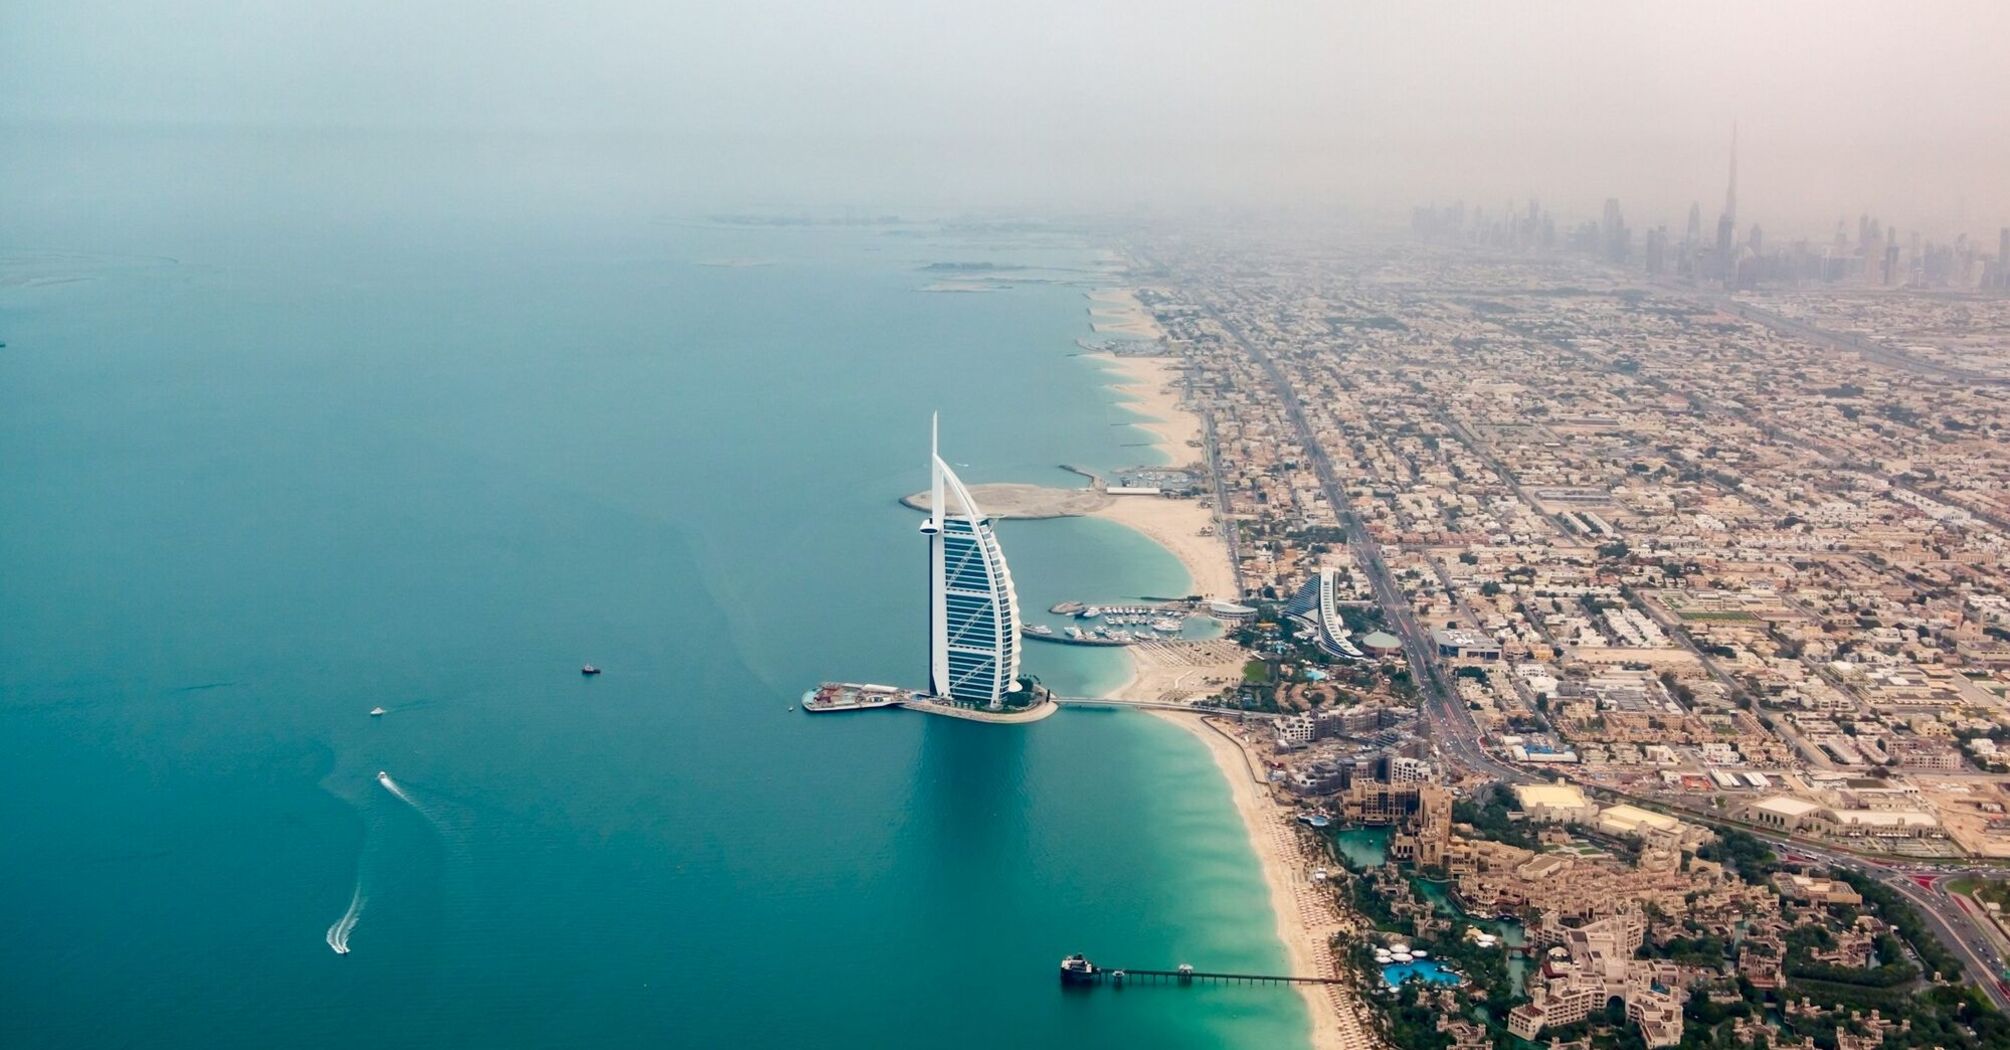 Aerial view of Dubai coastline and Burj Al Arab